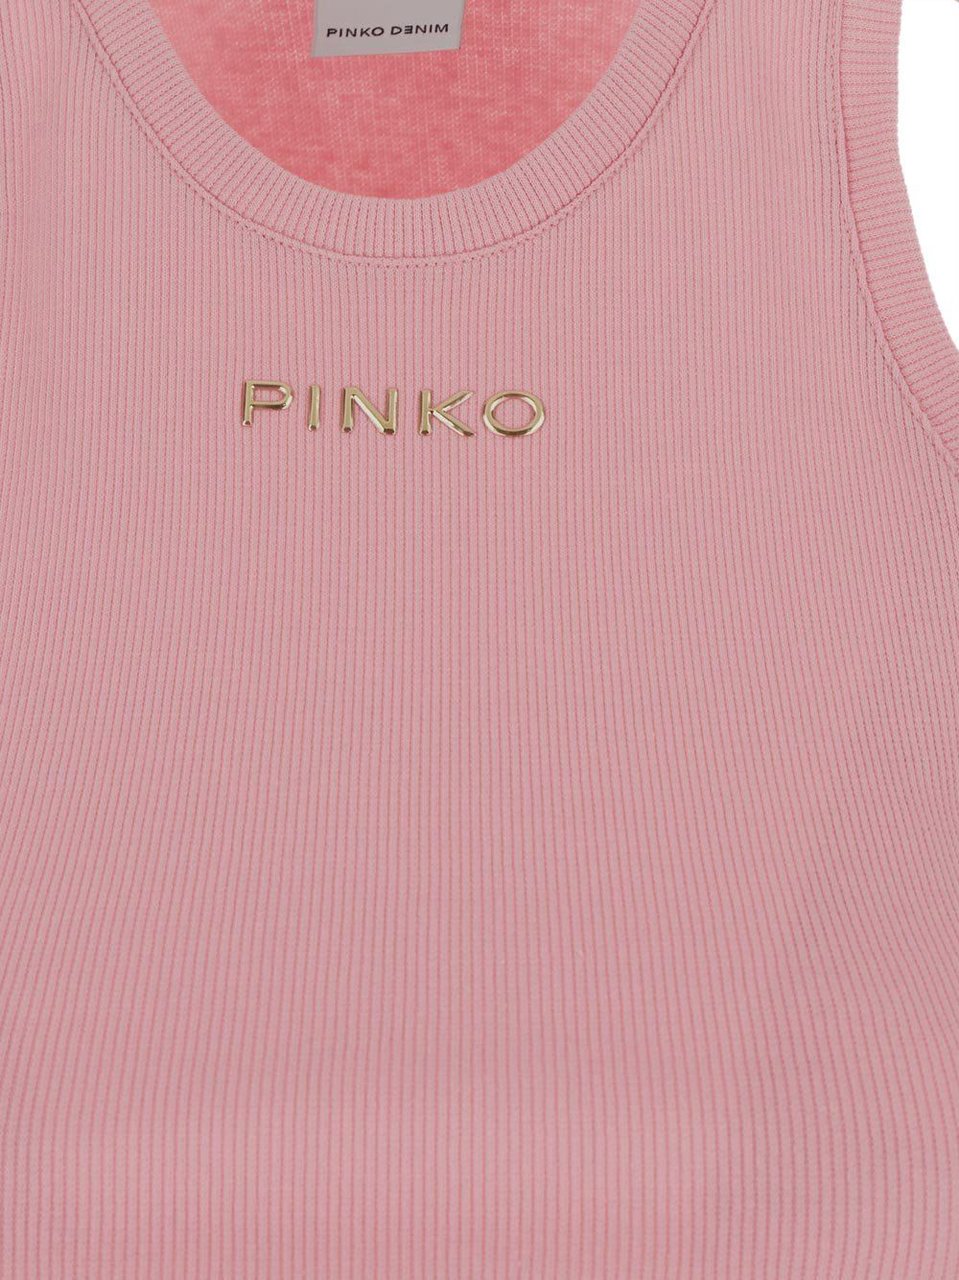 Pinko Cotton Tank Top Roze